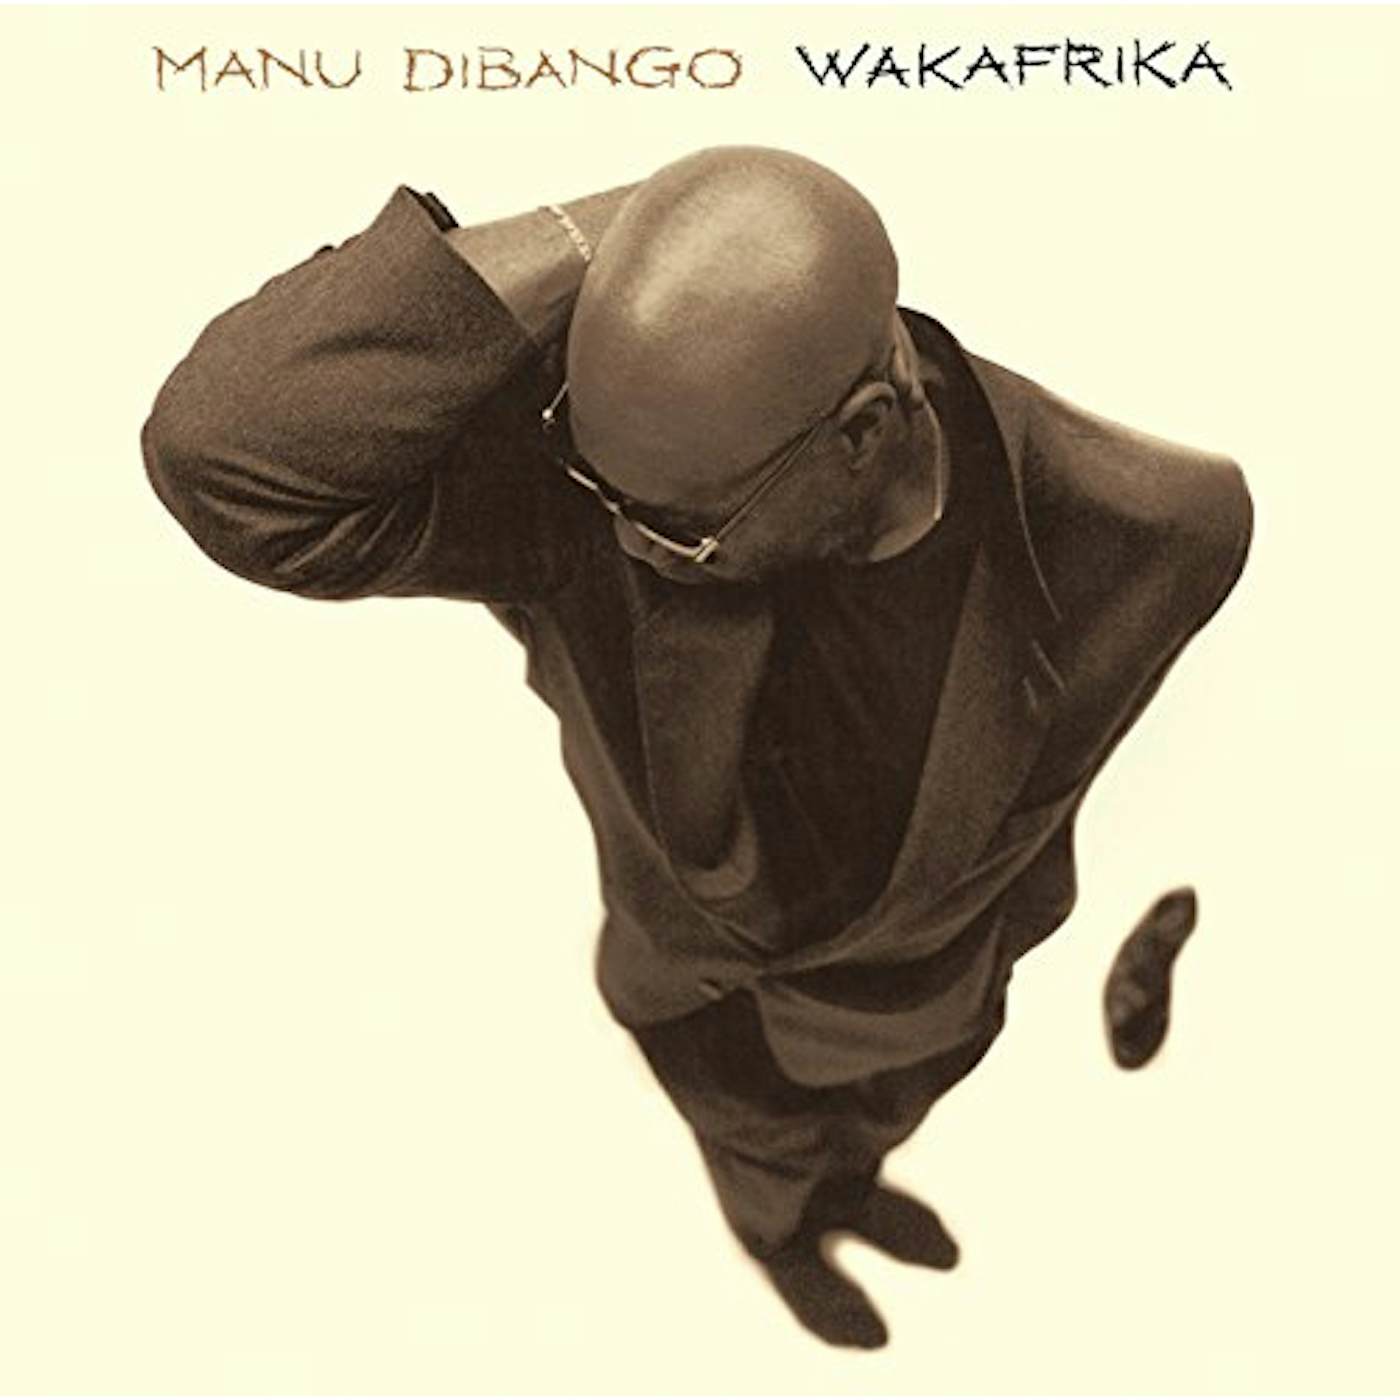 Manu Dibango Wakafrika Vinyl Record